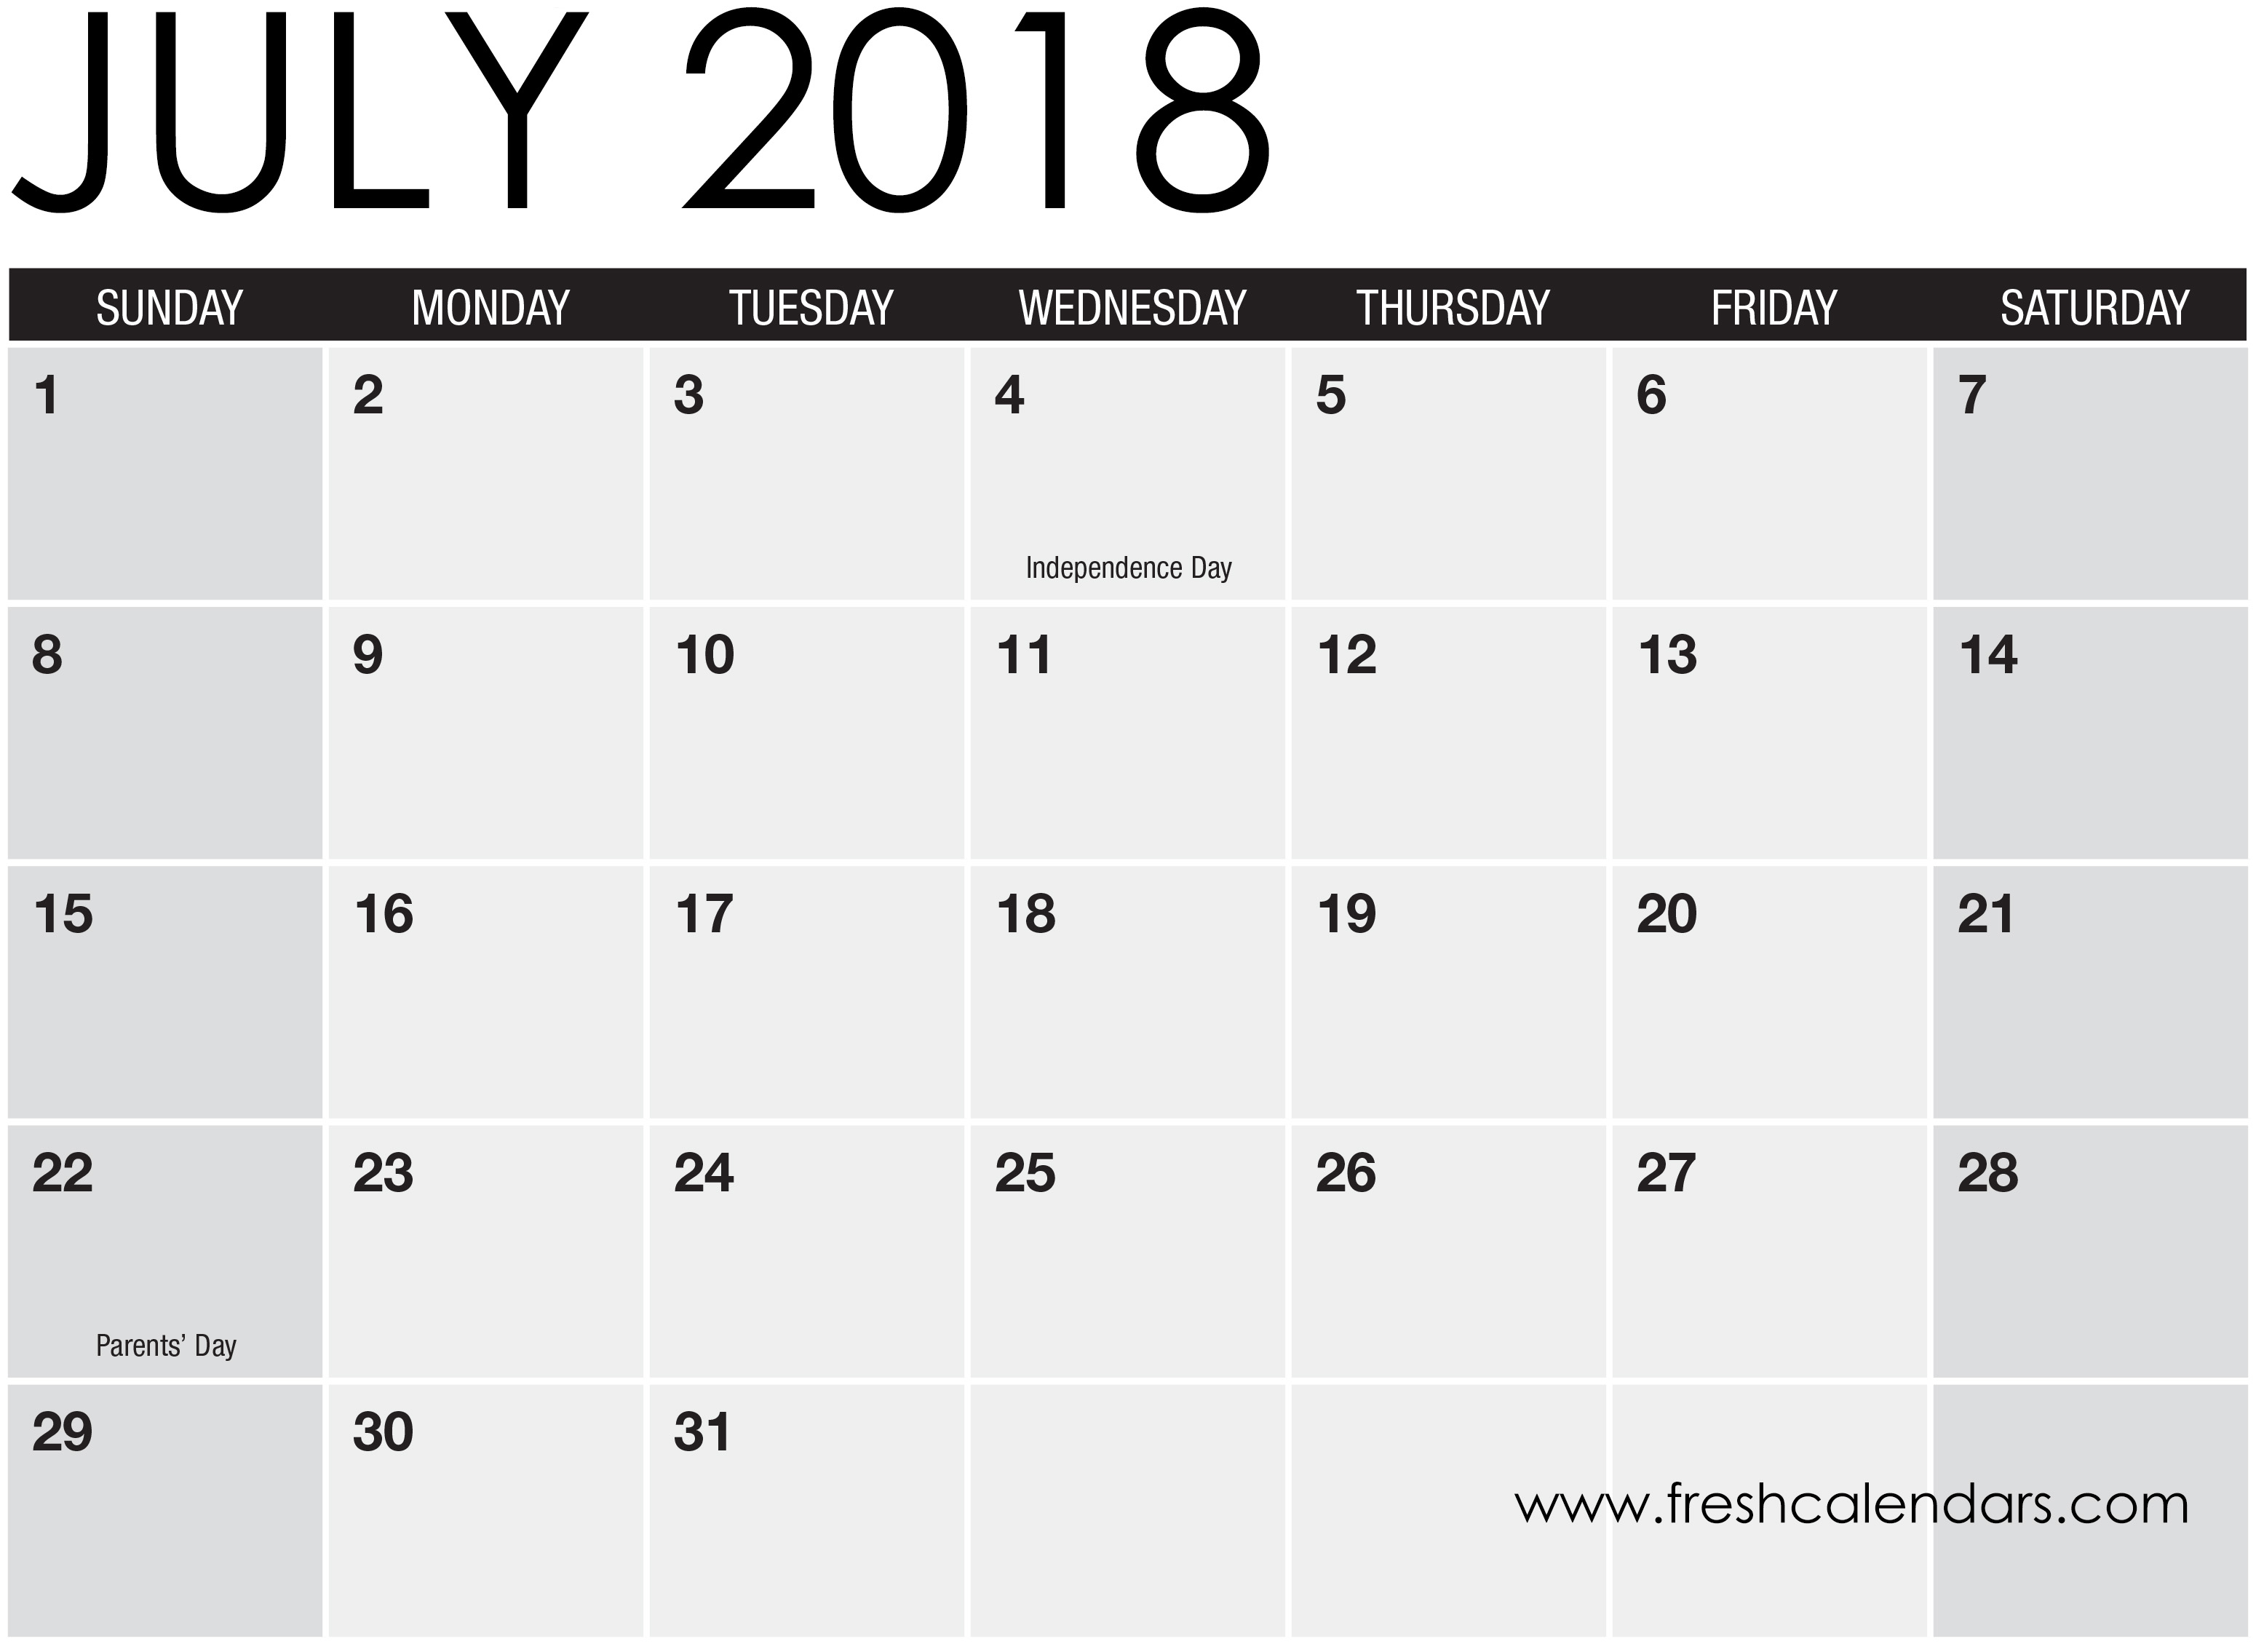 telugu-calendar-2018-july-pdf-print-with-festivals-holidays-list